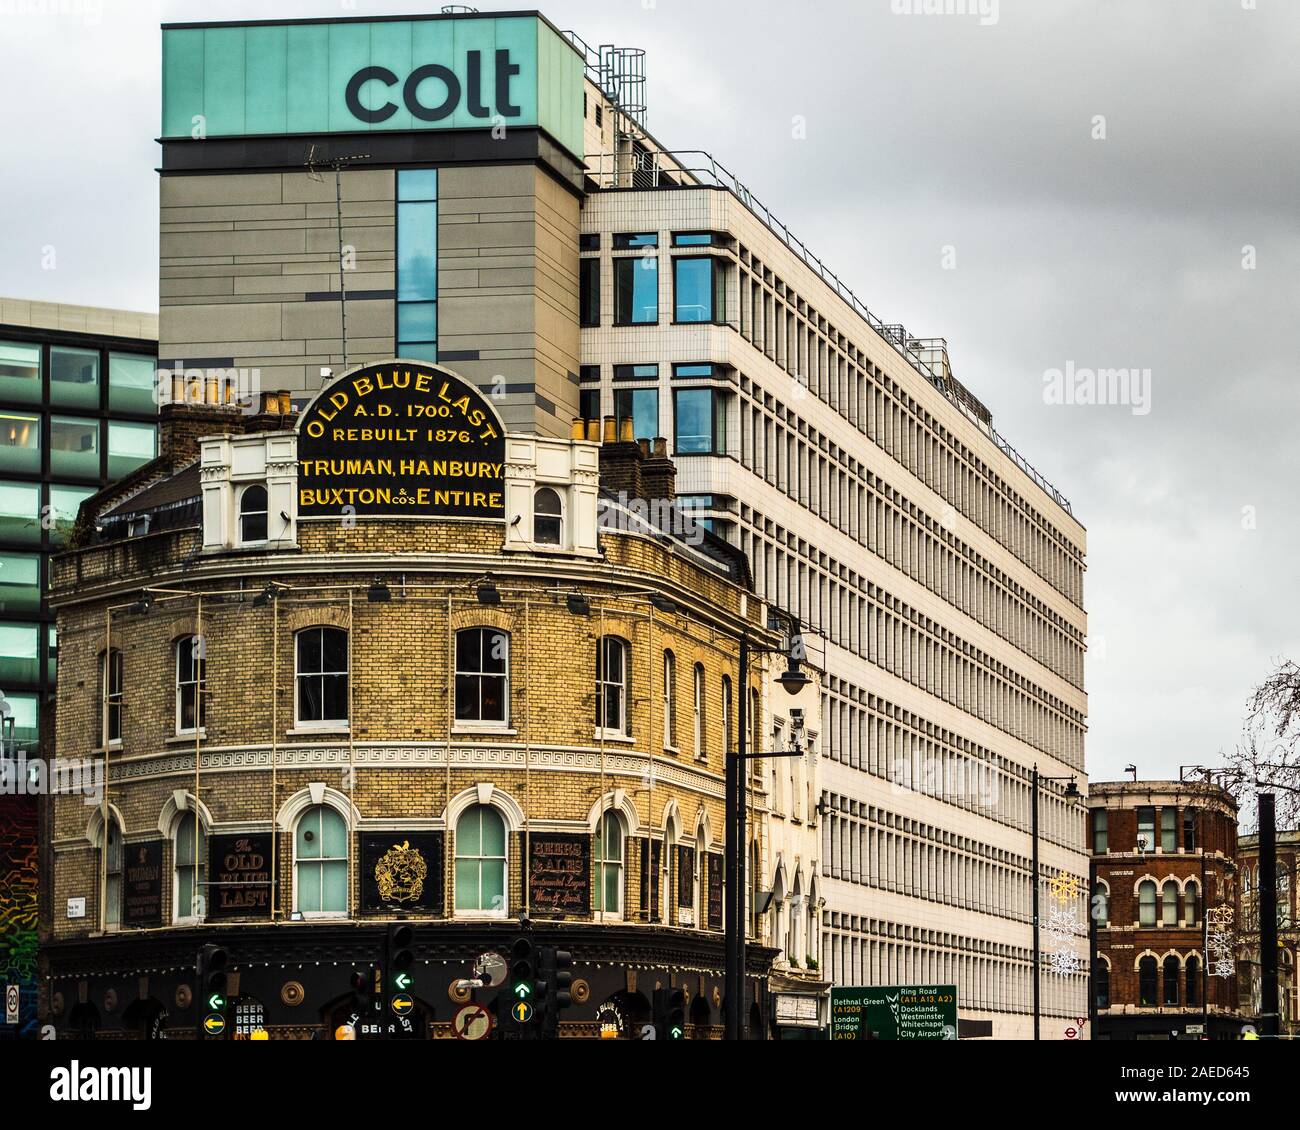 Colt Technology Services Group Limited Head Office Great Eastern Street London. Colt ist ein multinationales Telekommunikationsunternehmen mit Sitz in London. Stockfoto